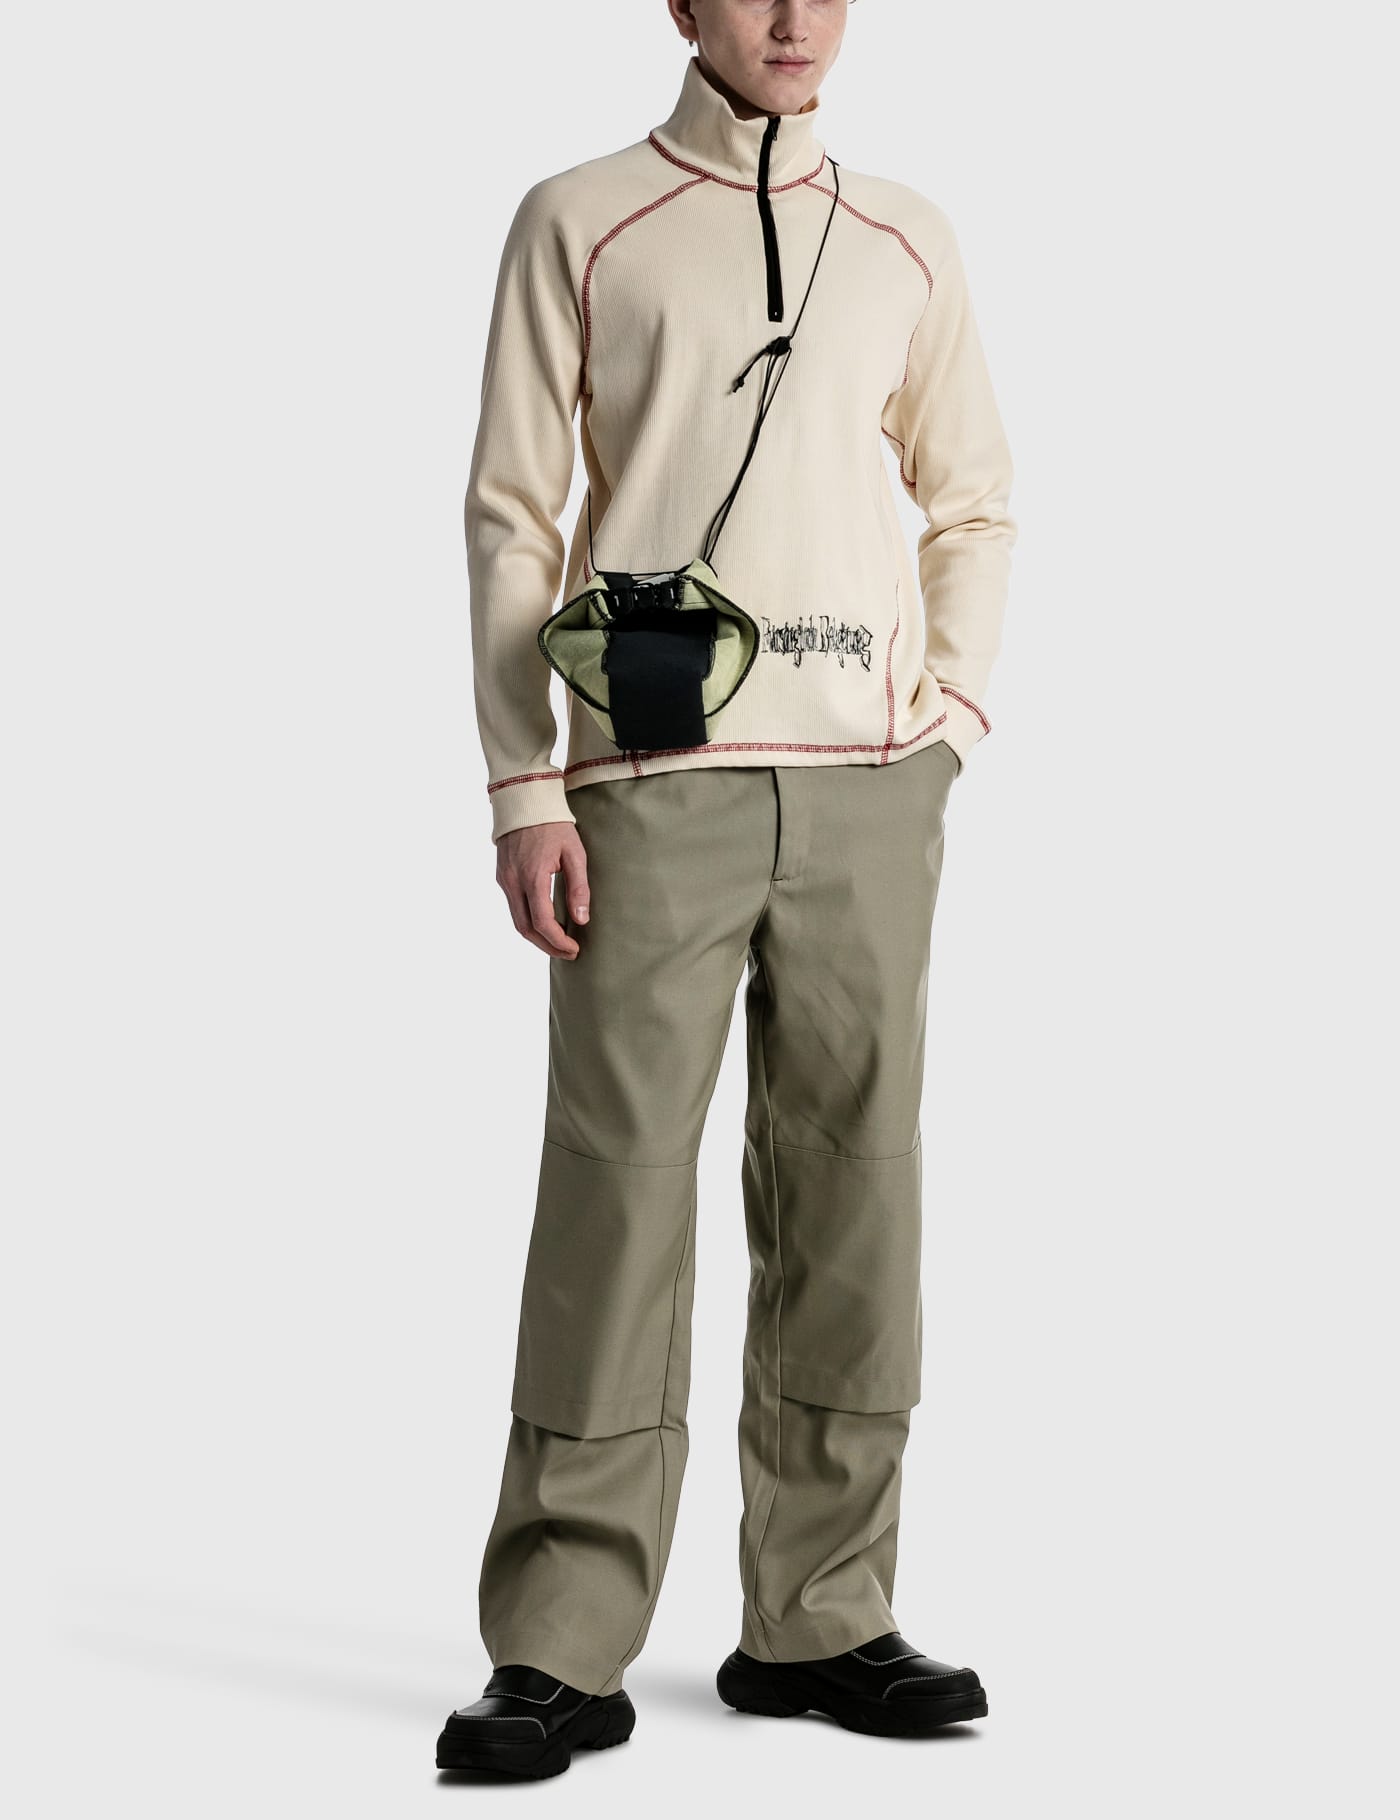 GR10K - Replicated Klopman Pants | HBX - Globally Curated Fashion 